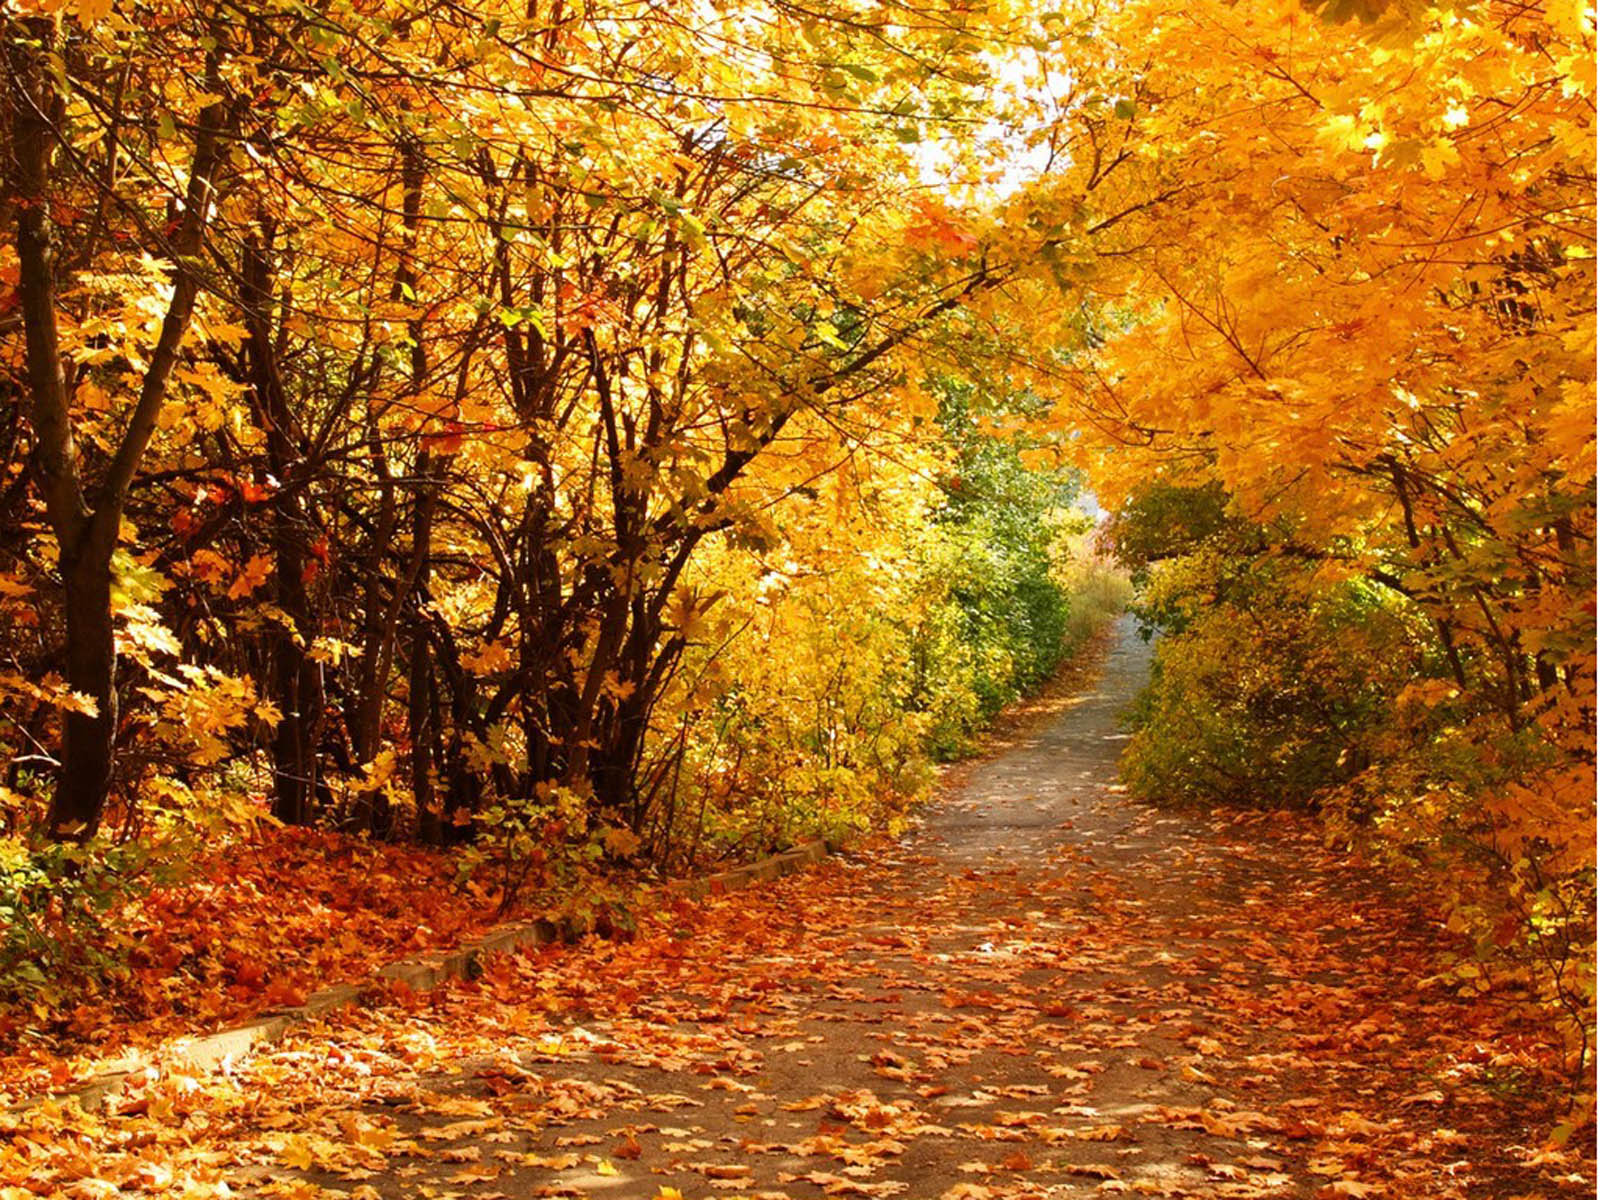  Wallpapers Beautiful Autumn Scenery Desktop BackgroundsBeautiful